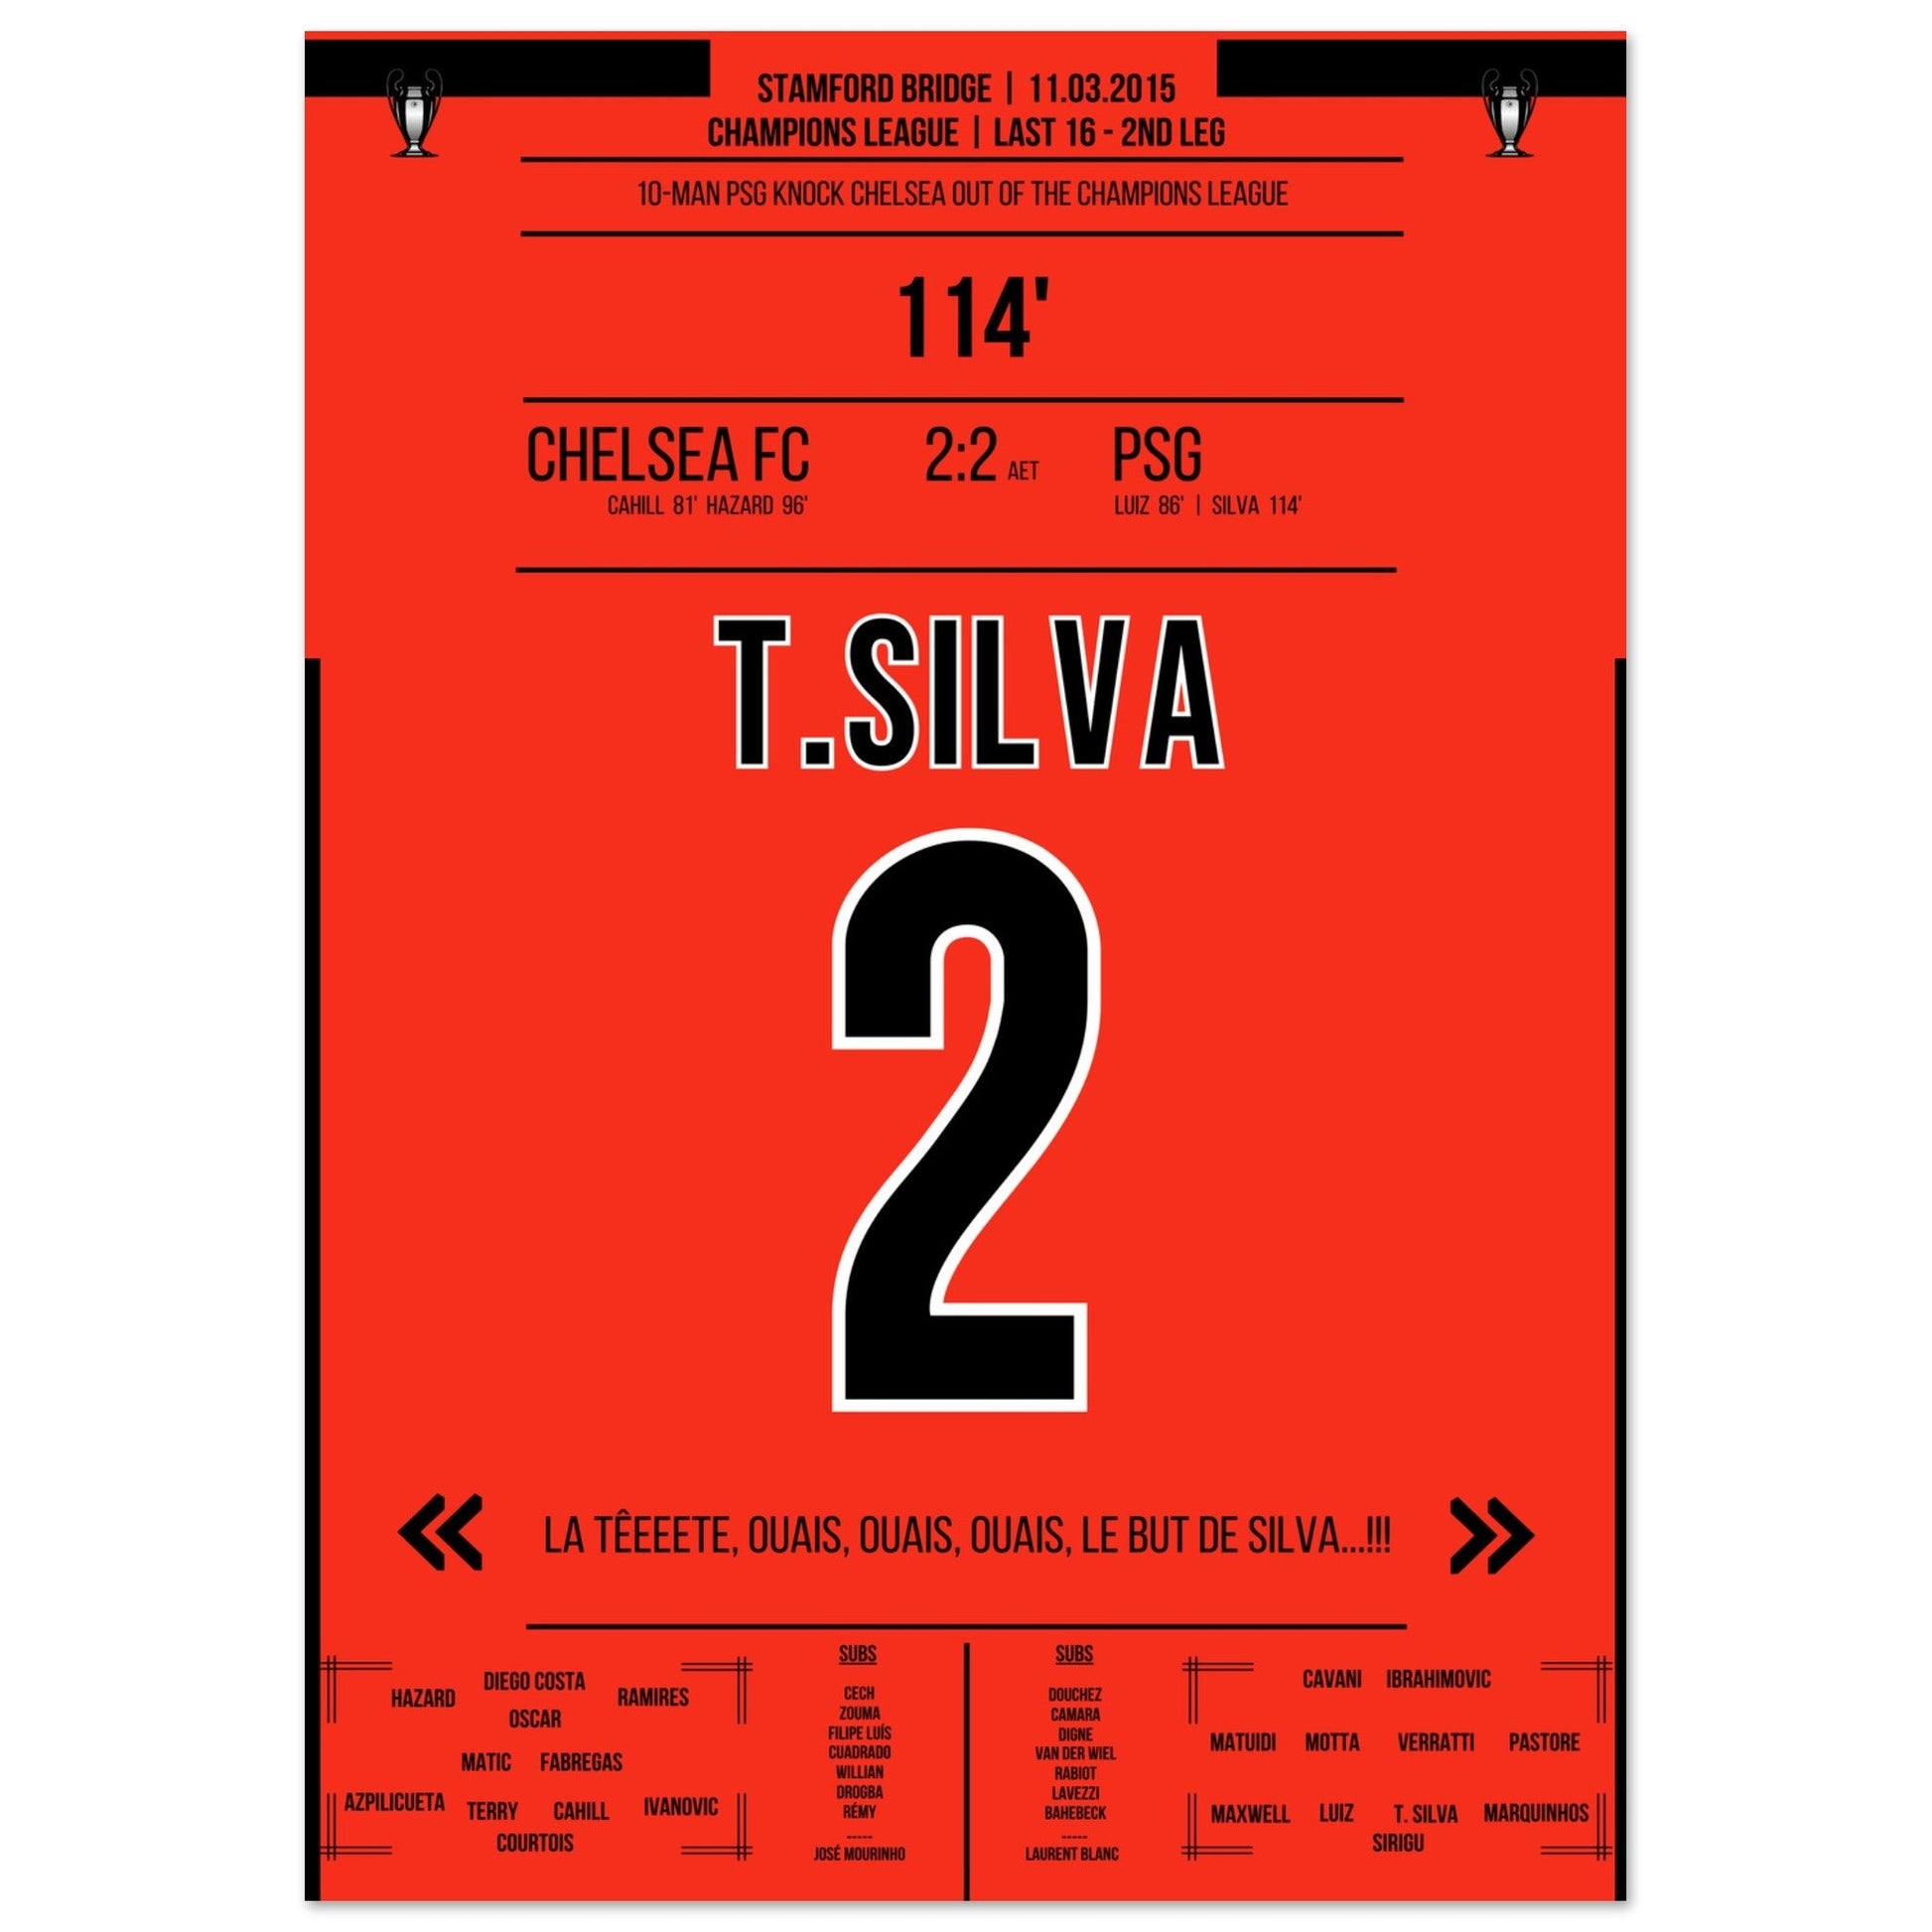 Thiago Silva's entscheidendes Kopfballtor im CL Achtelfinale gegen Chelsea 2015 